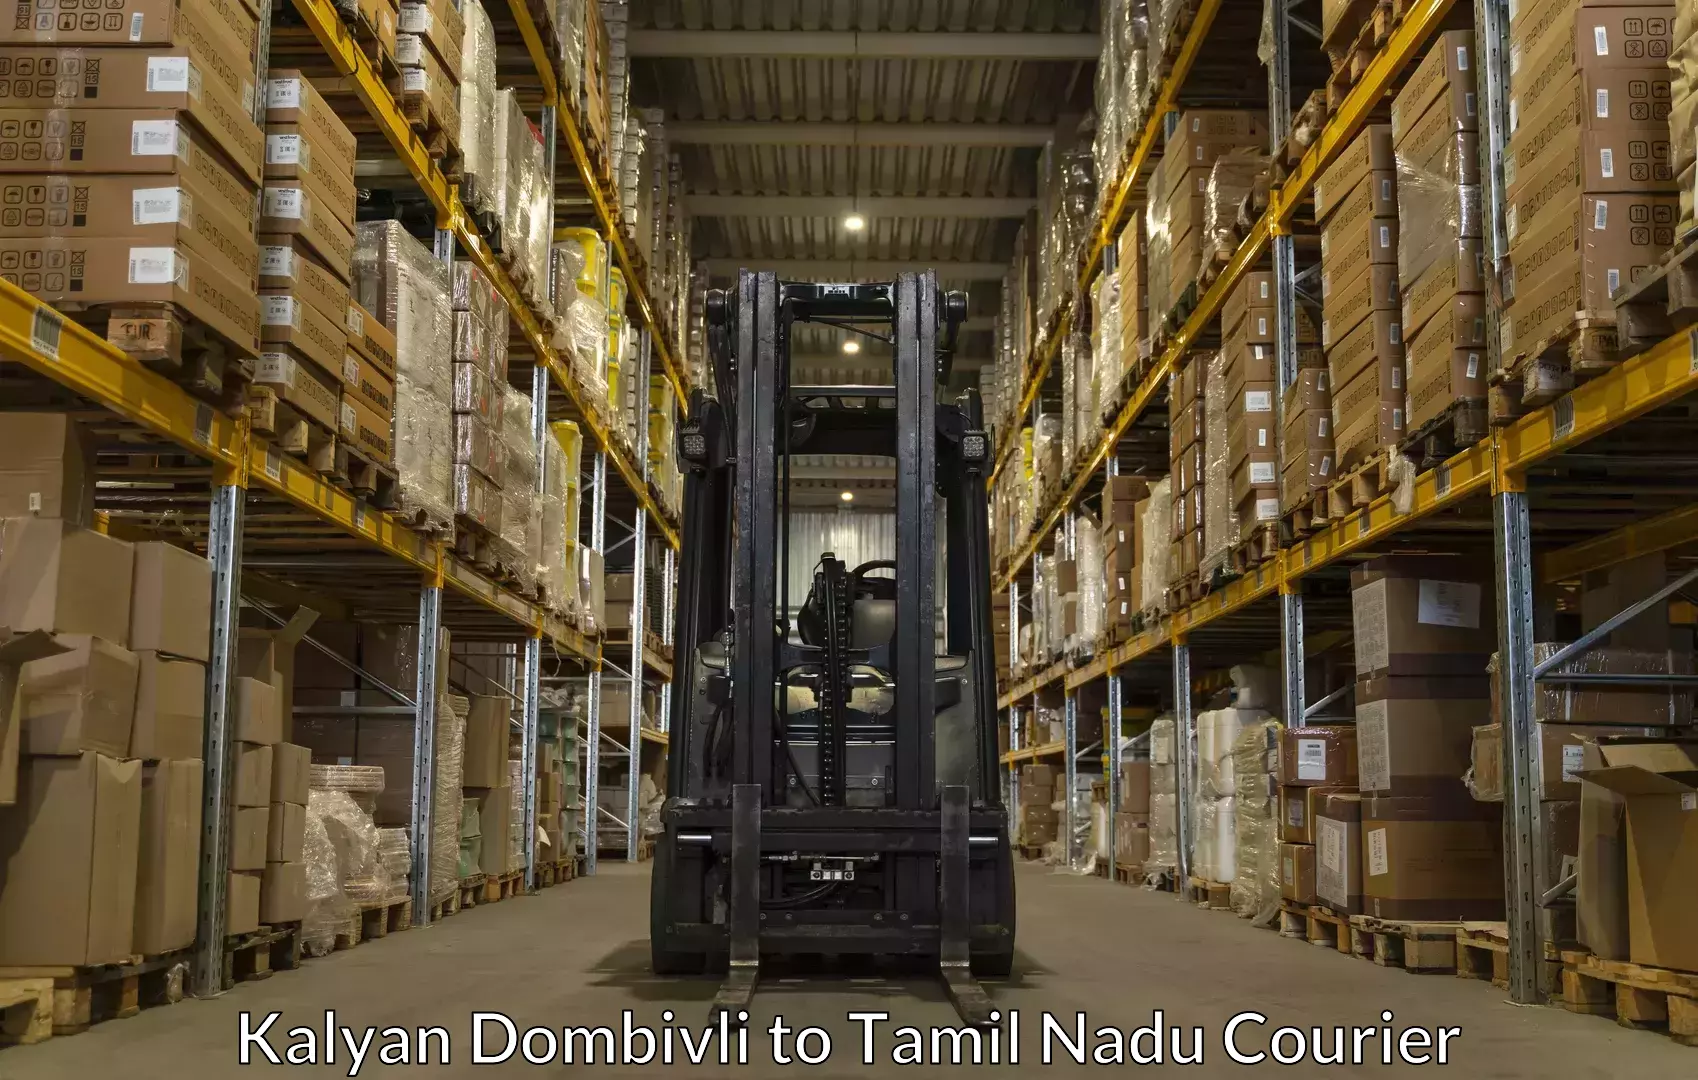 Luggage delivery network Kalyan Dombivli to Chennai Port